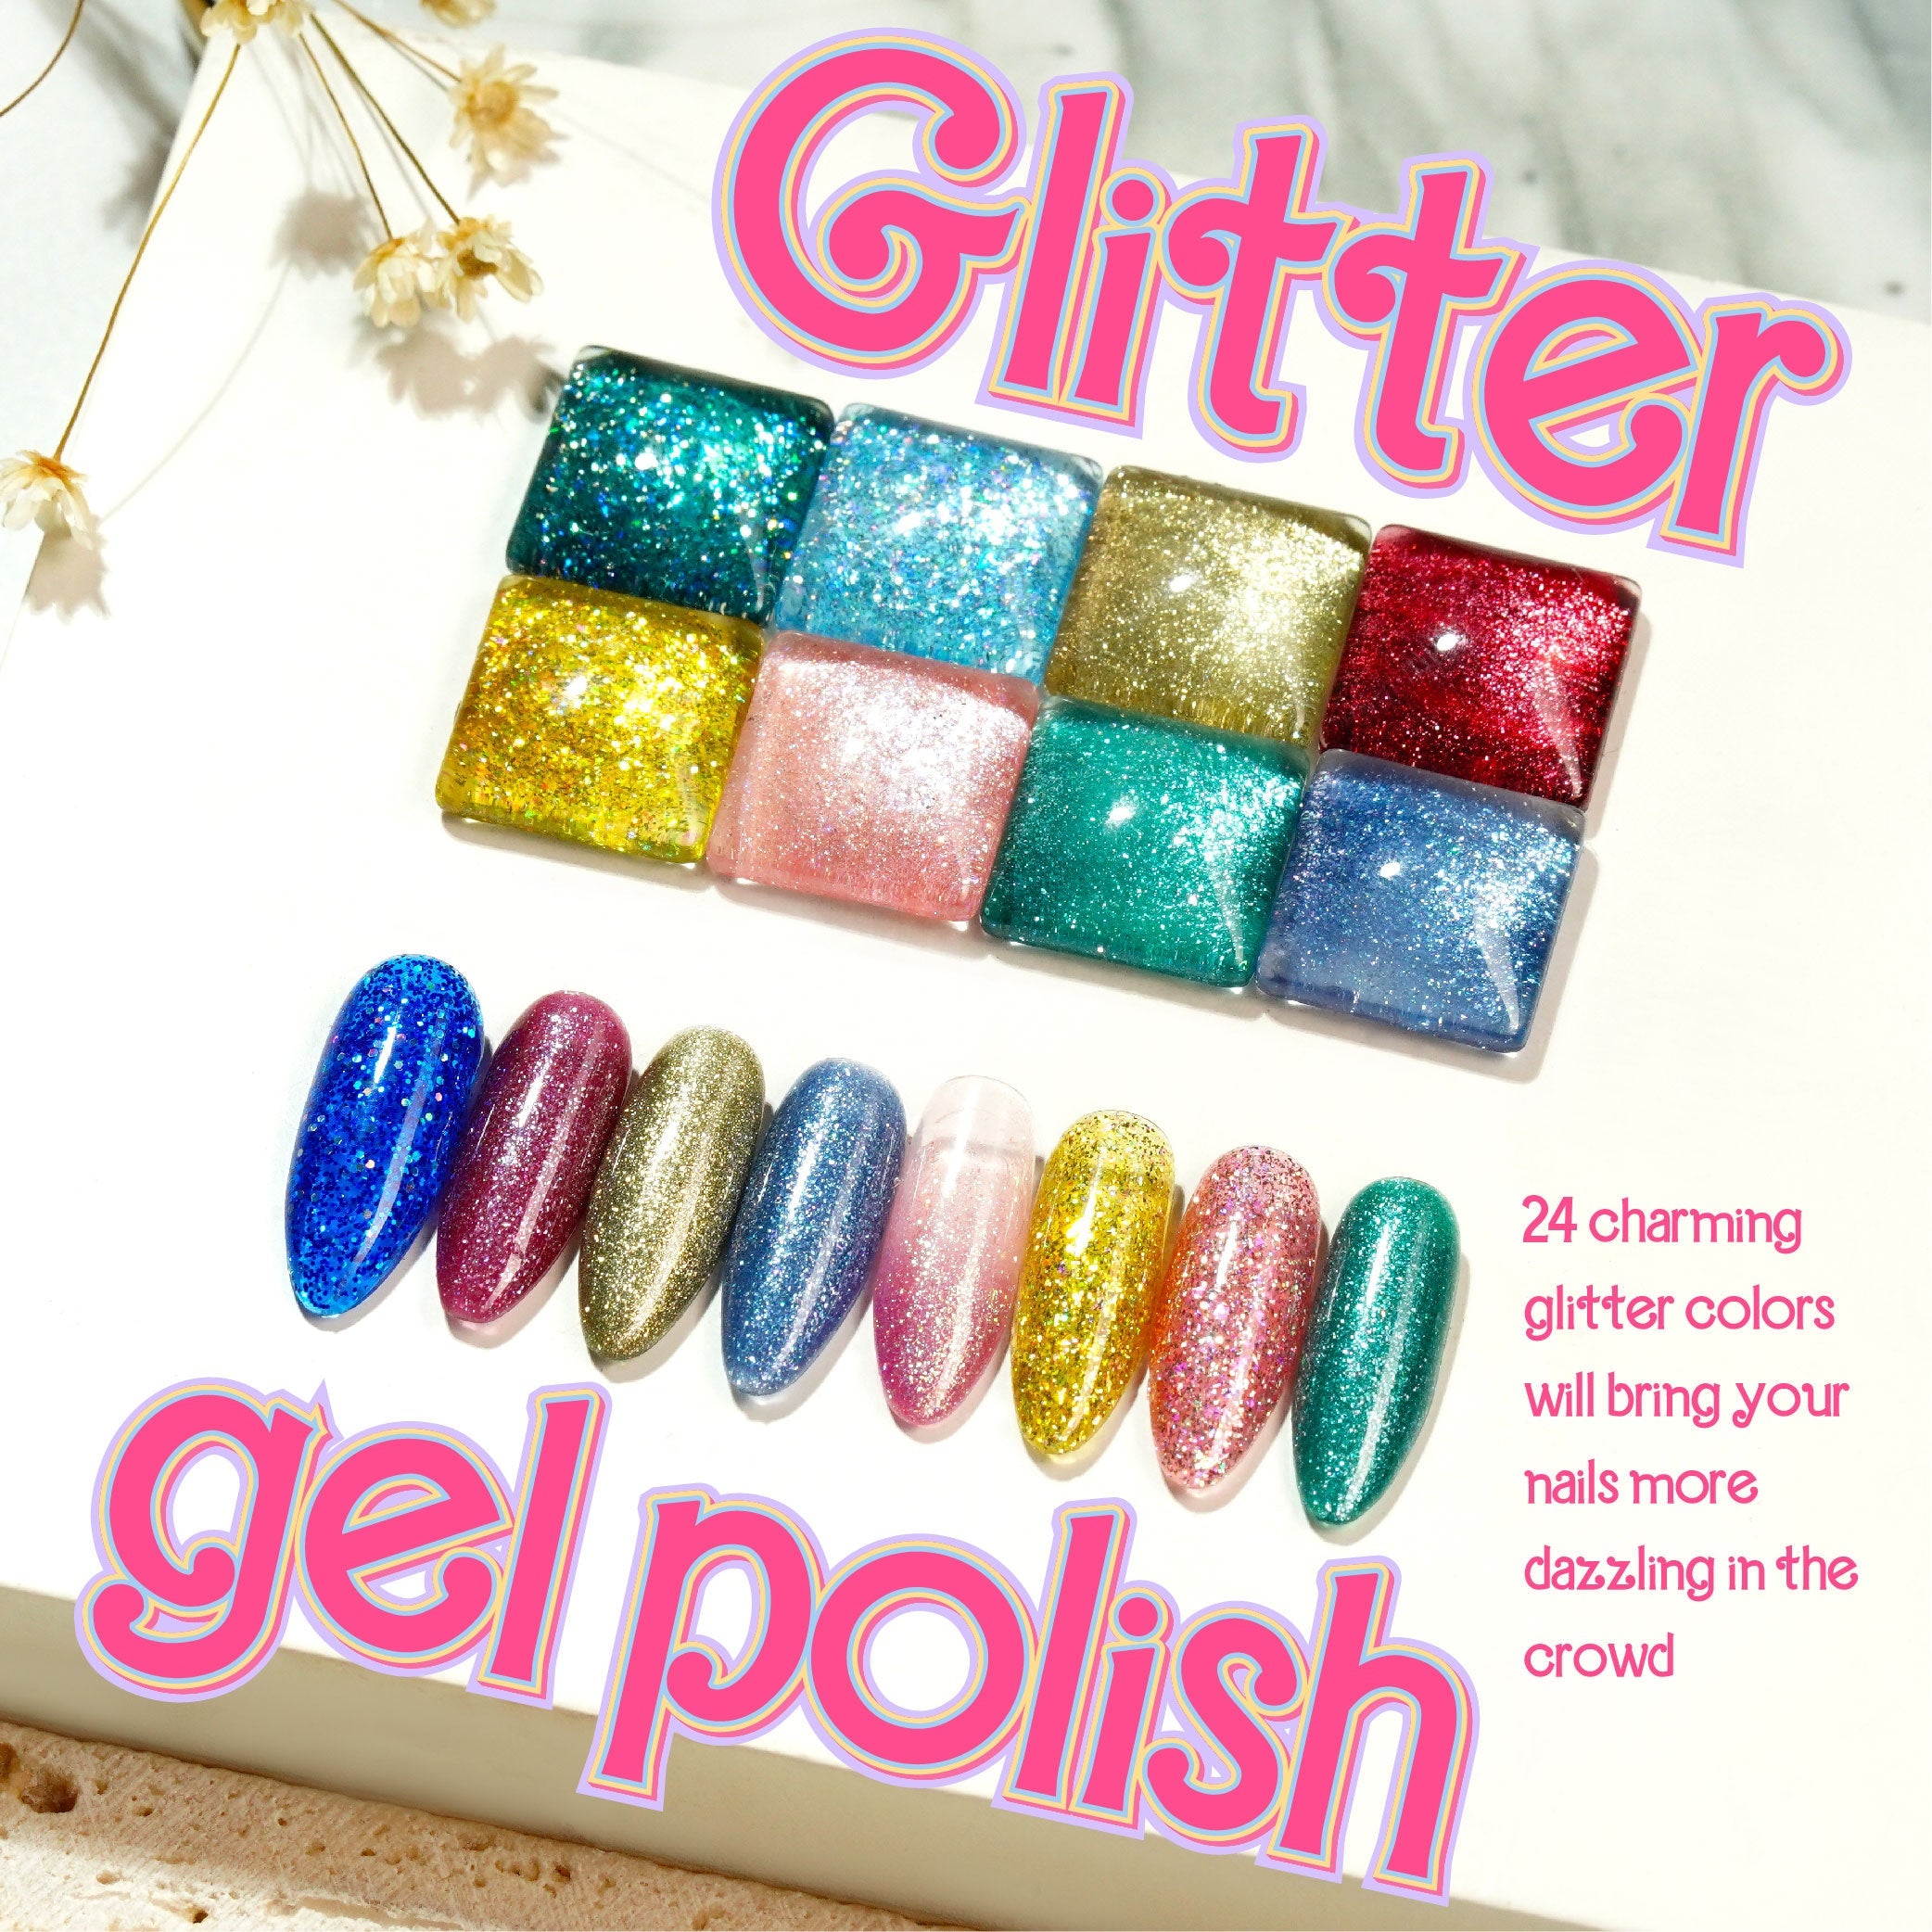 LAVIS Glitter G03 - 19 - Gel Polish 0.5 oz - Barbie Collection